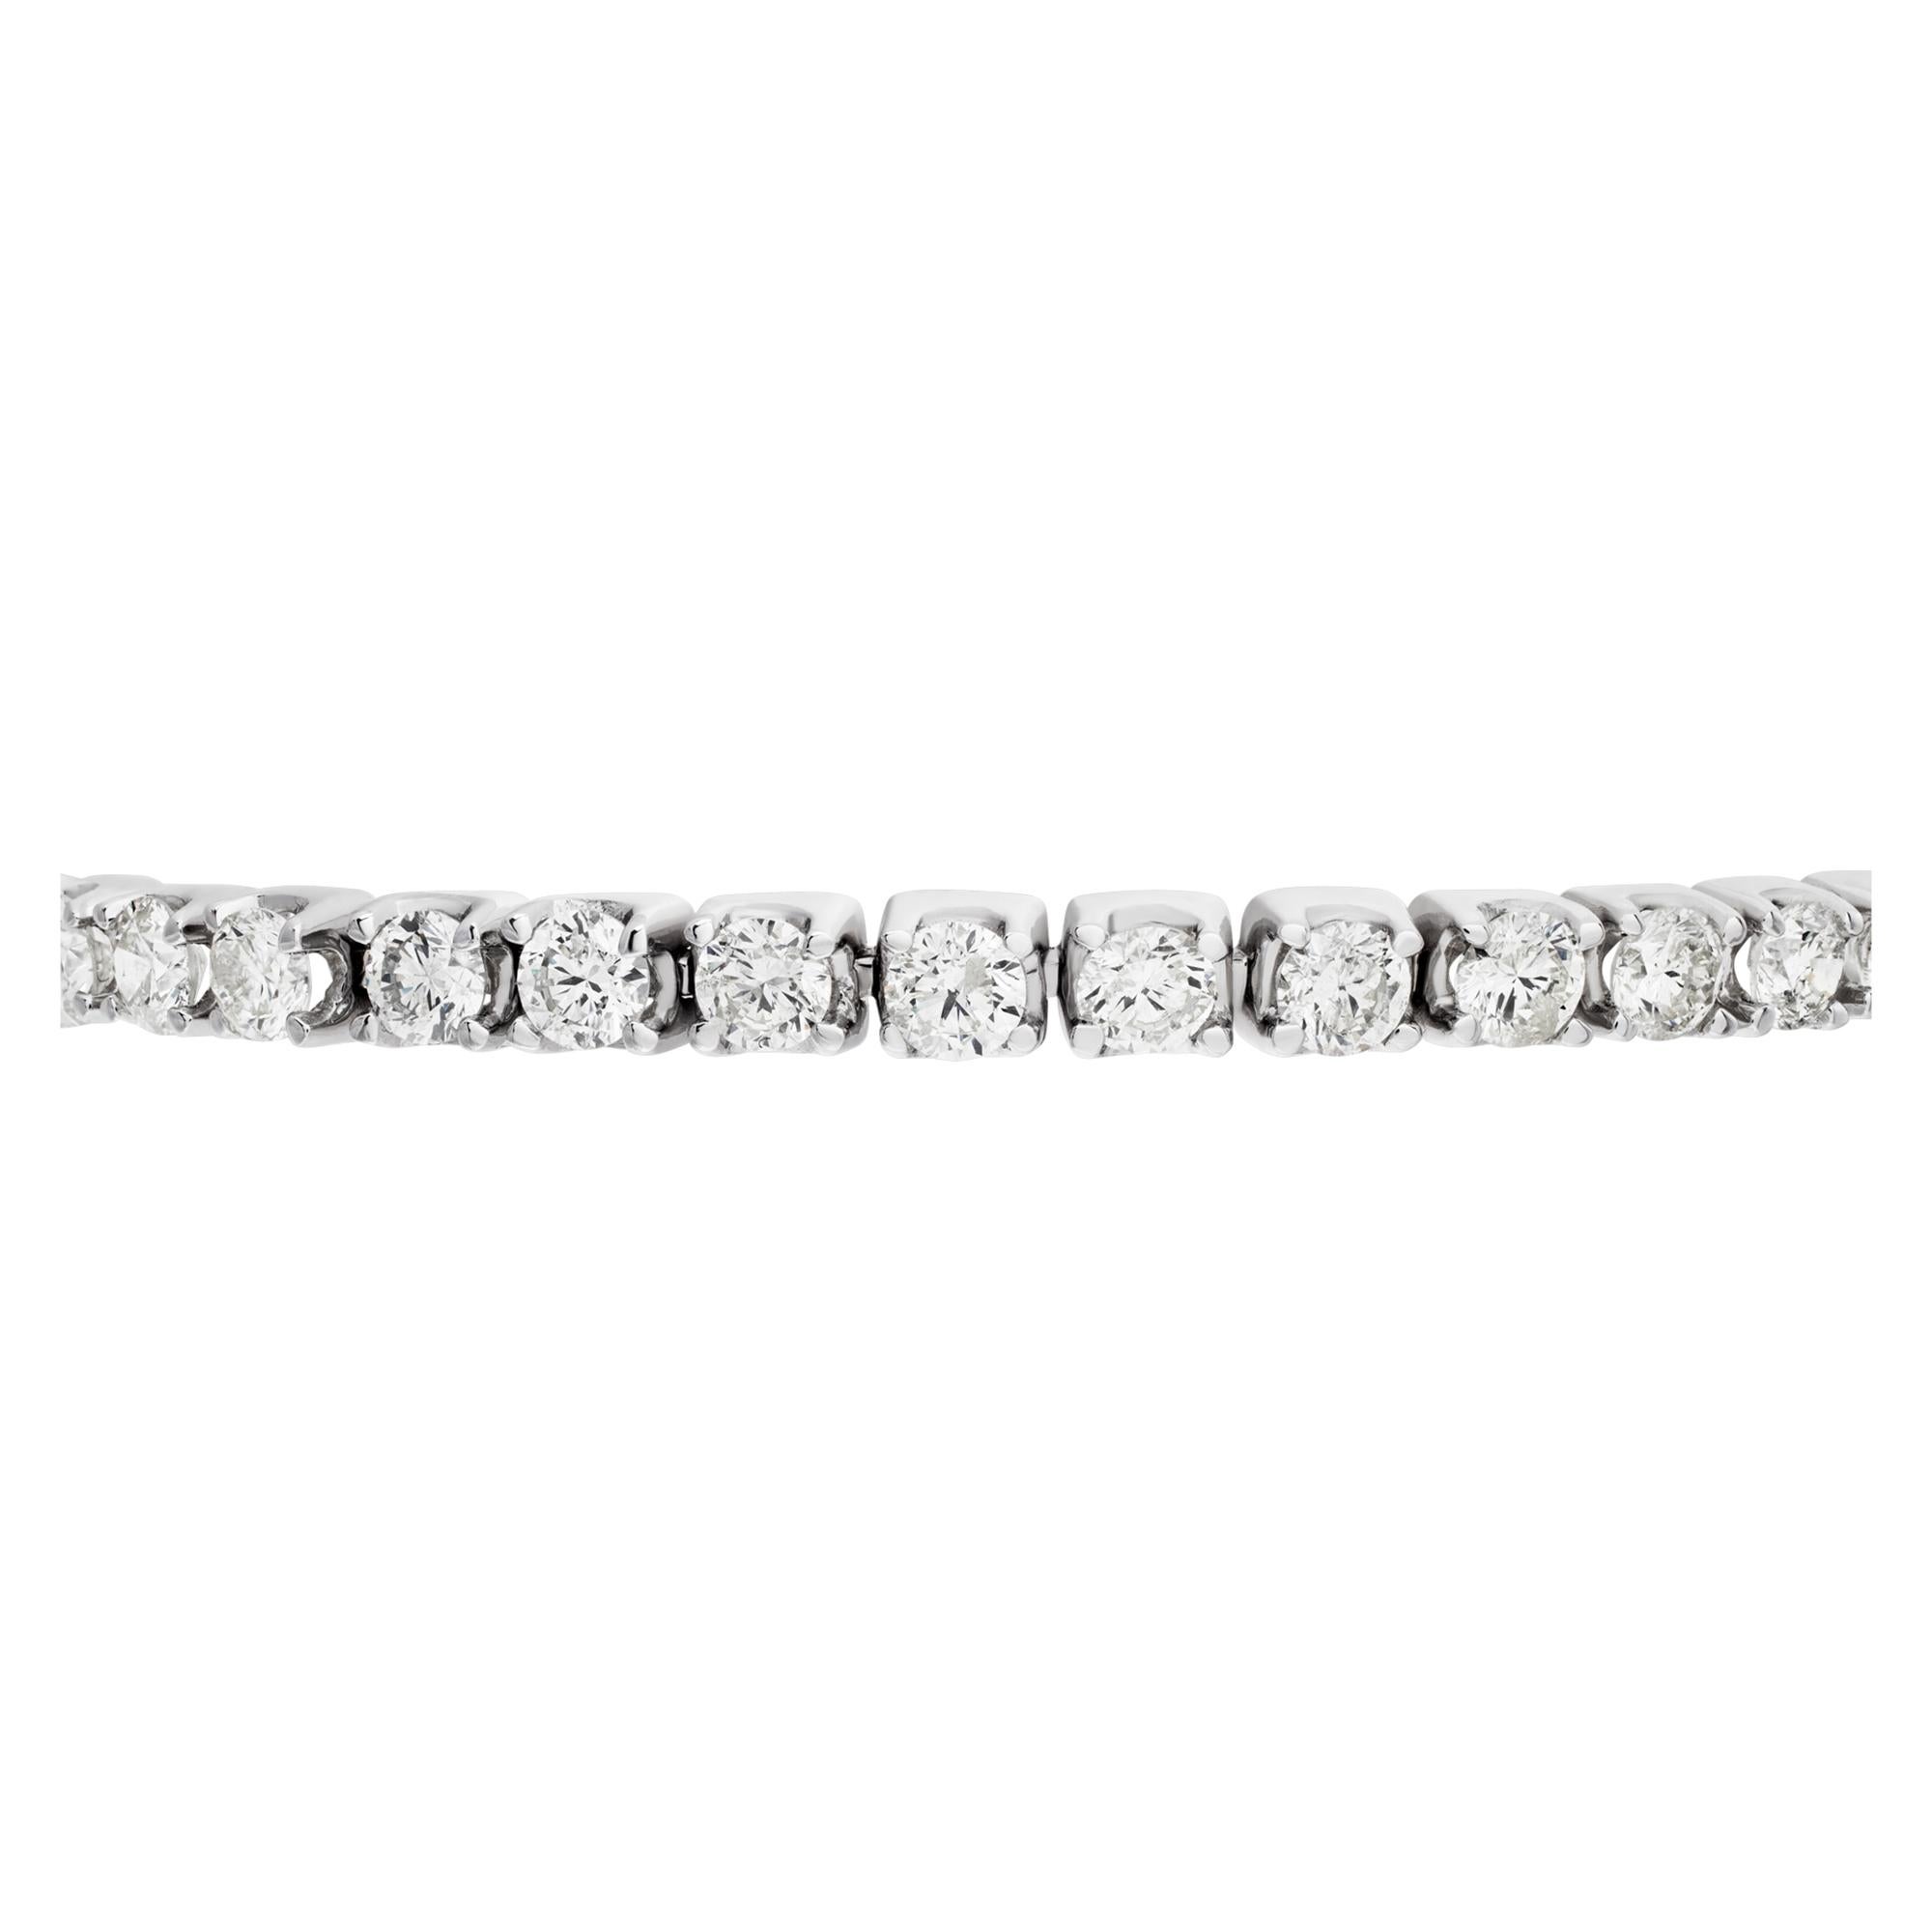 Sparkling line diamond bracelet with 8.09 carat full cut round diamonds set in 14K white gold- Diamonds estimate: H/I color, SI clarity. Length 7.5 inches.